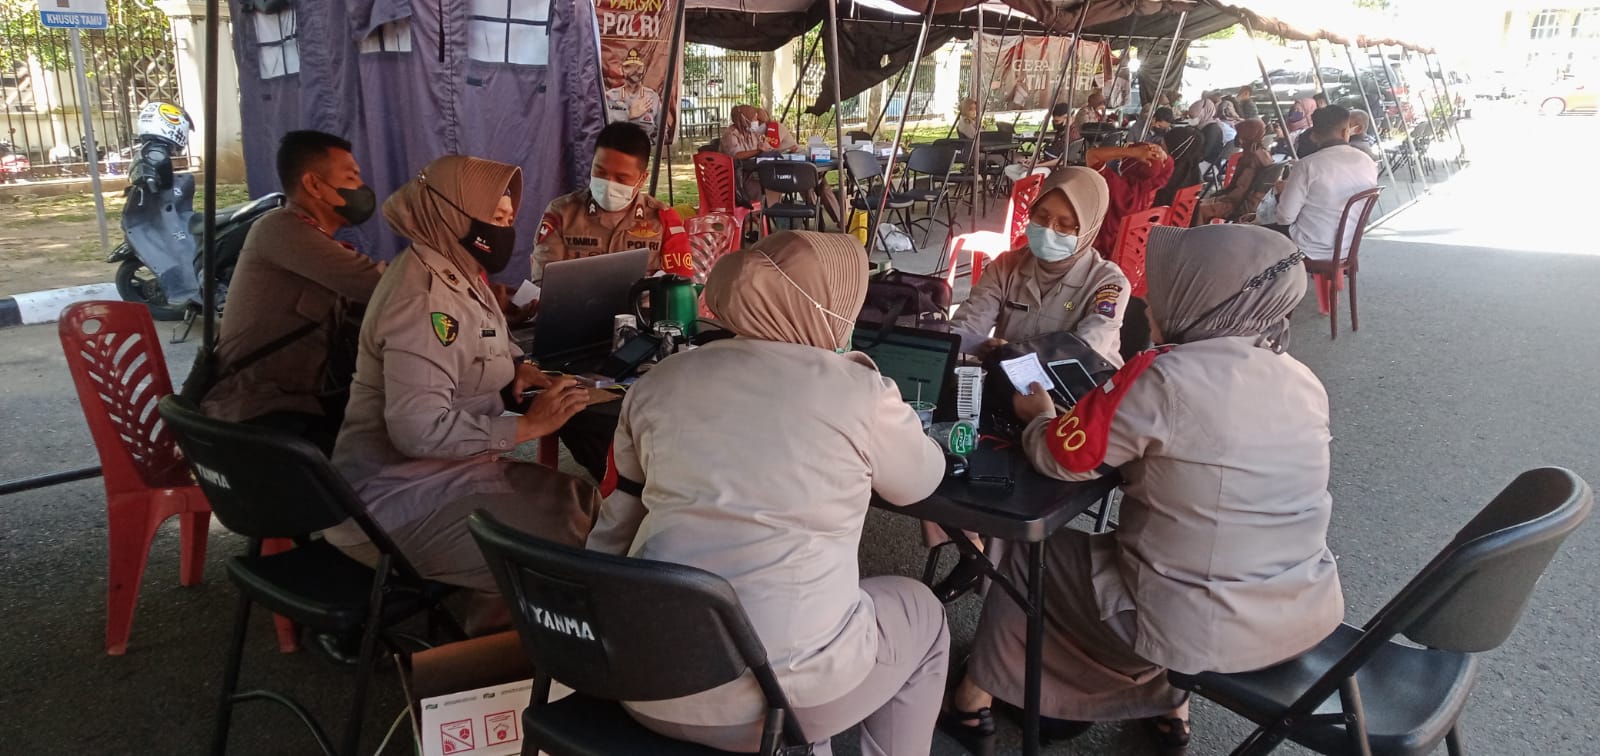 Operasi Zebra Singgalang 2021, Polda Sumbar gelar SUMDARSIN   TNS - Polda Sumatera Barat membuka gerai Vaksin SUMDARSIN (Sumbar Sadar Vaksin) di halaman dan basement Mapolda Sumbar, Kamis (18/11).  Vaksinasi massal secara gratis ini dilaksanakan dalam rangka Operasi Zebra Singgalang 2021, dan sebagai bentuk upaya Polda Sumbar demi percepatan vaksinasi.  Terlihat sejak pagi sekitar pukul 08.30 WIB, ratusan masyarakat telah hadir di Mapolda untuk mendapatkan pelayanan vaksin Covid-19.   Awalnya, masyarakat yang datang dipandu oleh petugas untuk dibantu pendaftaran. Usai mendaftar, selanjutnya diarahkan kepada petugas tenaga kesehatan untuk dilakukan pemeriksaan kesehatan (screening) dan kemudian menuju tempat vaksin.   Kabid Humas Polda Sumbar Kombes Pol Satake Bayu Setianto, S.Ik mengatakan, pelaksanaan SUMDARSIN yang digelar Polda Sumbar dan jajaran adalah sebagai upaya akselerasi Vaksin Covid-19 di Sumbar.   "Di Polda Sumbar dan Polres-polres sejajaran juga melaksanakan SUMDARSIN. Dalam rangka Operasi Zebra Singgalang 2021," katanya.   Selain masyarakat umum, kata Kabid Humas, pelaksanaan vaksinasi Covid-19 di Polda Sumbar terdapat pelajar dan beberapa komunitas masyarakat yang mengikutinya.   "Mudah-mudahan dengan banyaknya masyarakat di Sumatera Barat yang di vaksin, maka nantinya diharapkan masyarakat di Provinsi Sumbar menjadi herd immunity," pungkasnya.(*)